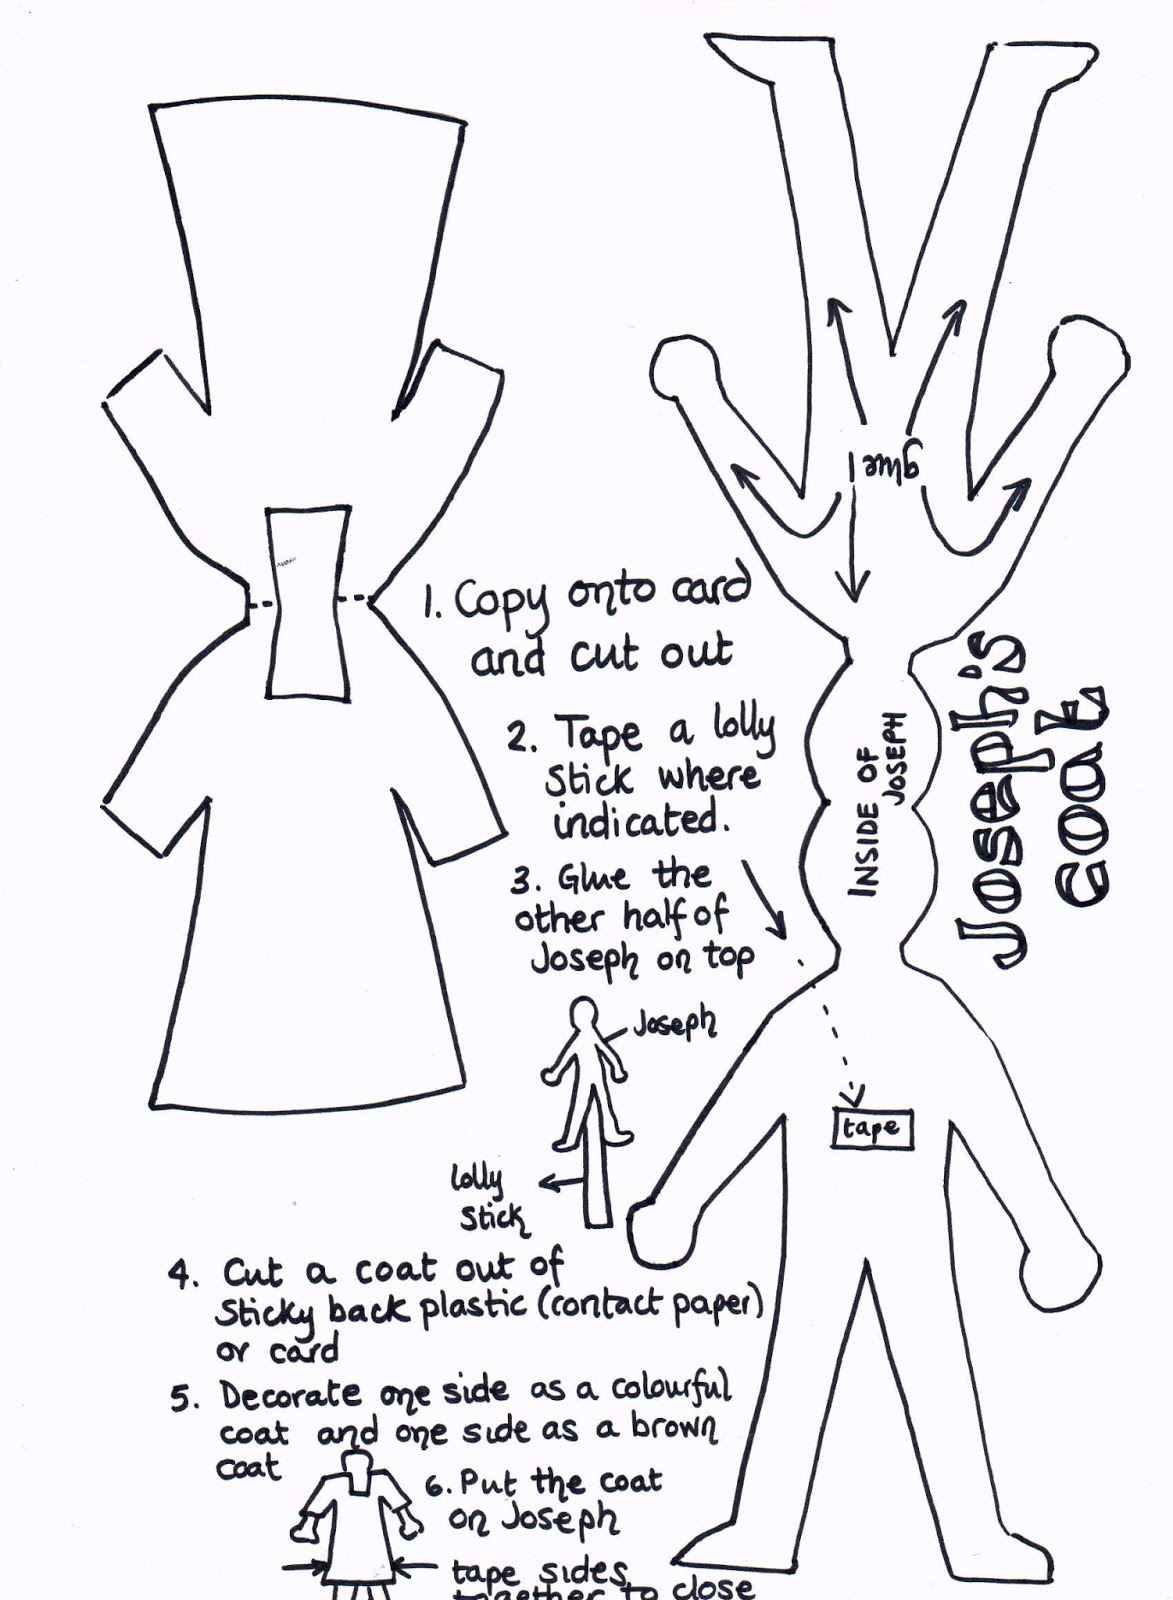 Flame: Creative Children's Ministry: Joseph's coat stick puppet craft